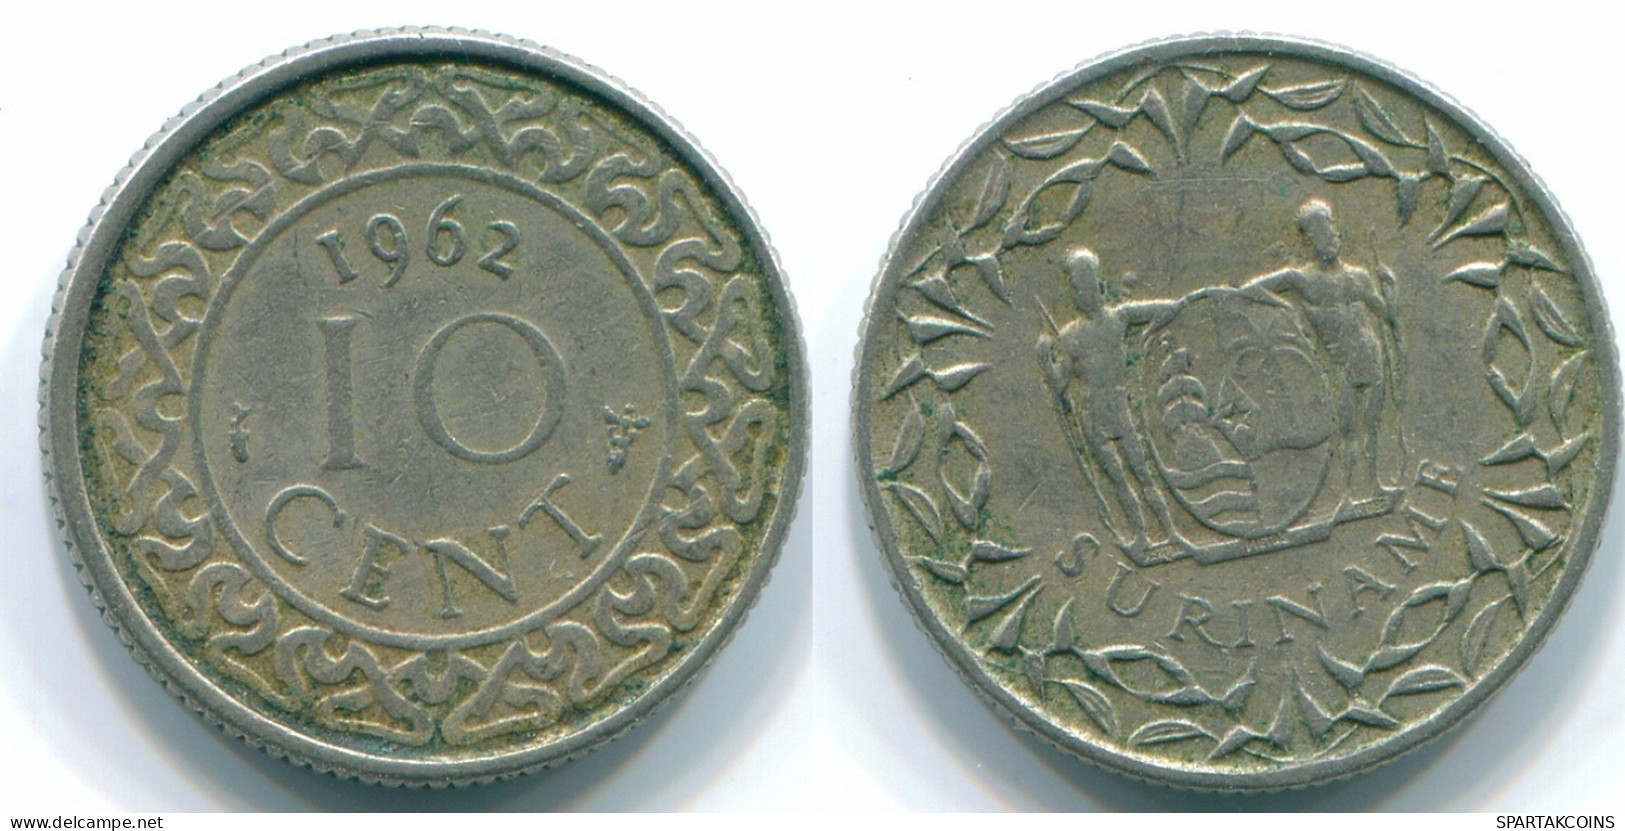 10 CENTS 1962 SURINAME Netherlands Nickel Colonial Coin #S13217.U.A - Surinam 1975 - ...